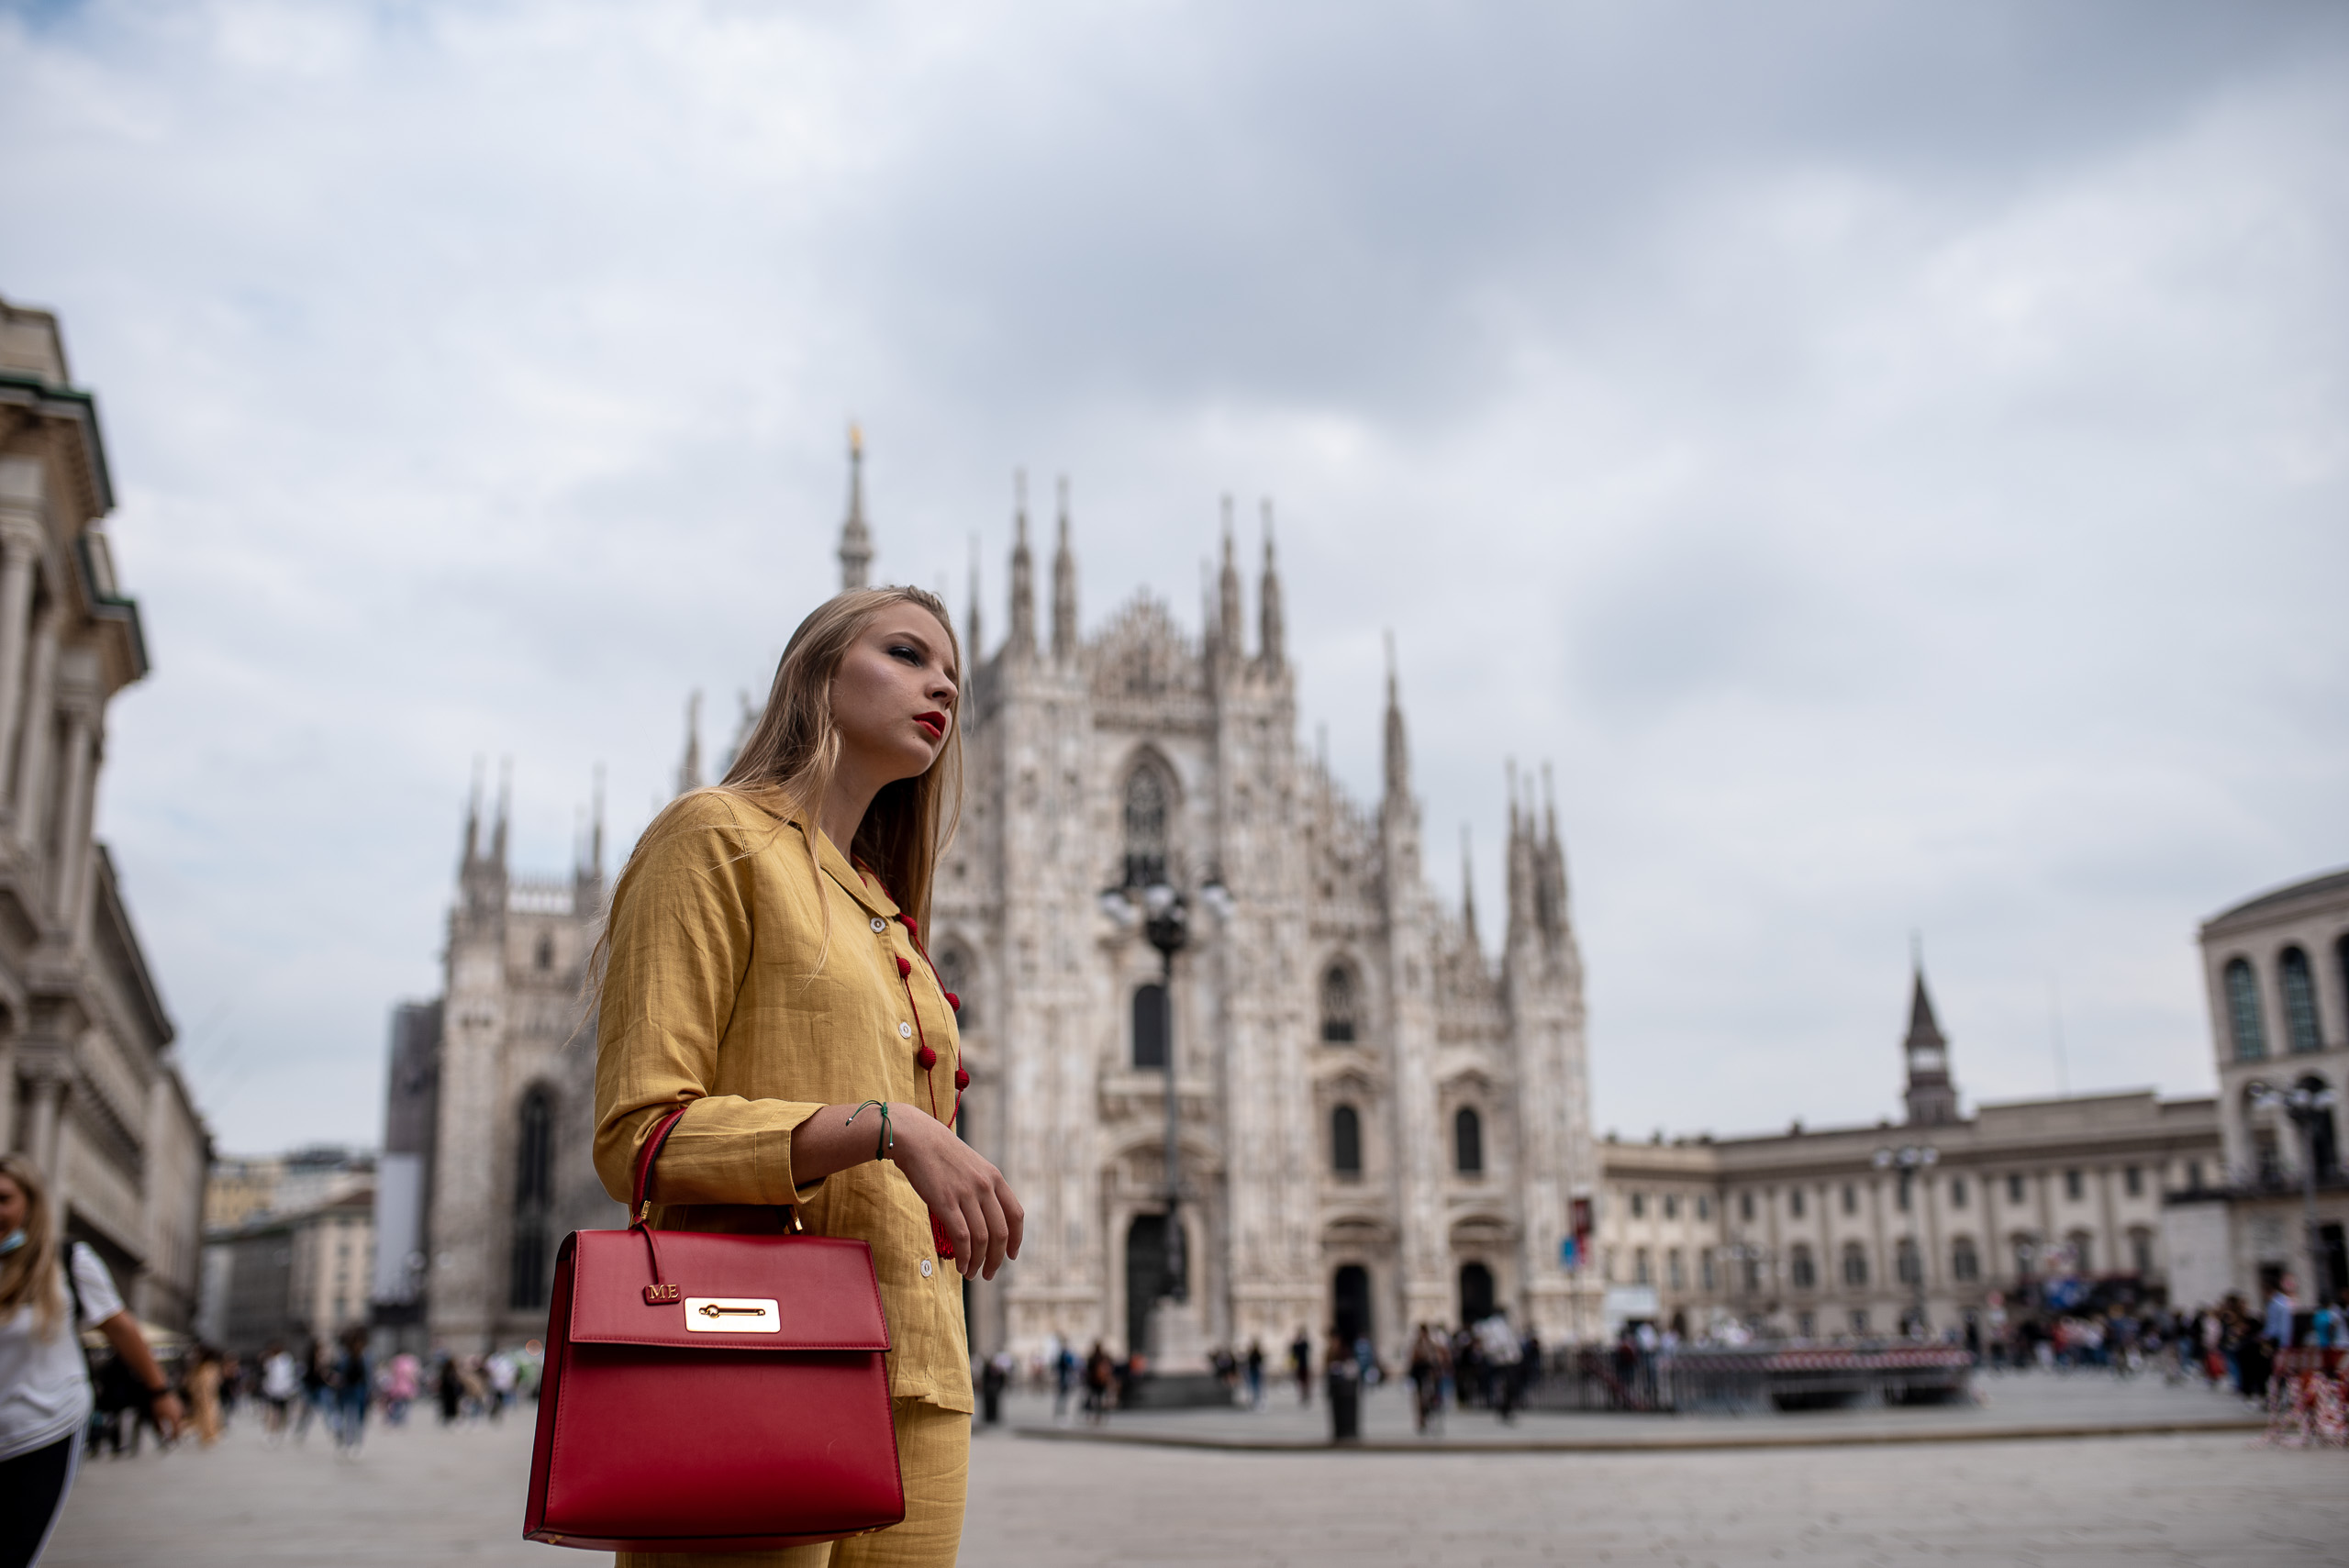 Marosetti Borse con la testimonial Elisa Caterina Egger alla Milano Fashion Week 2020 (1)